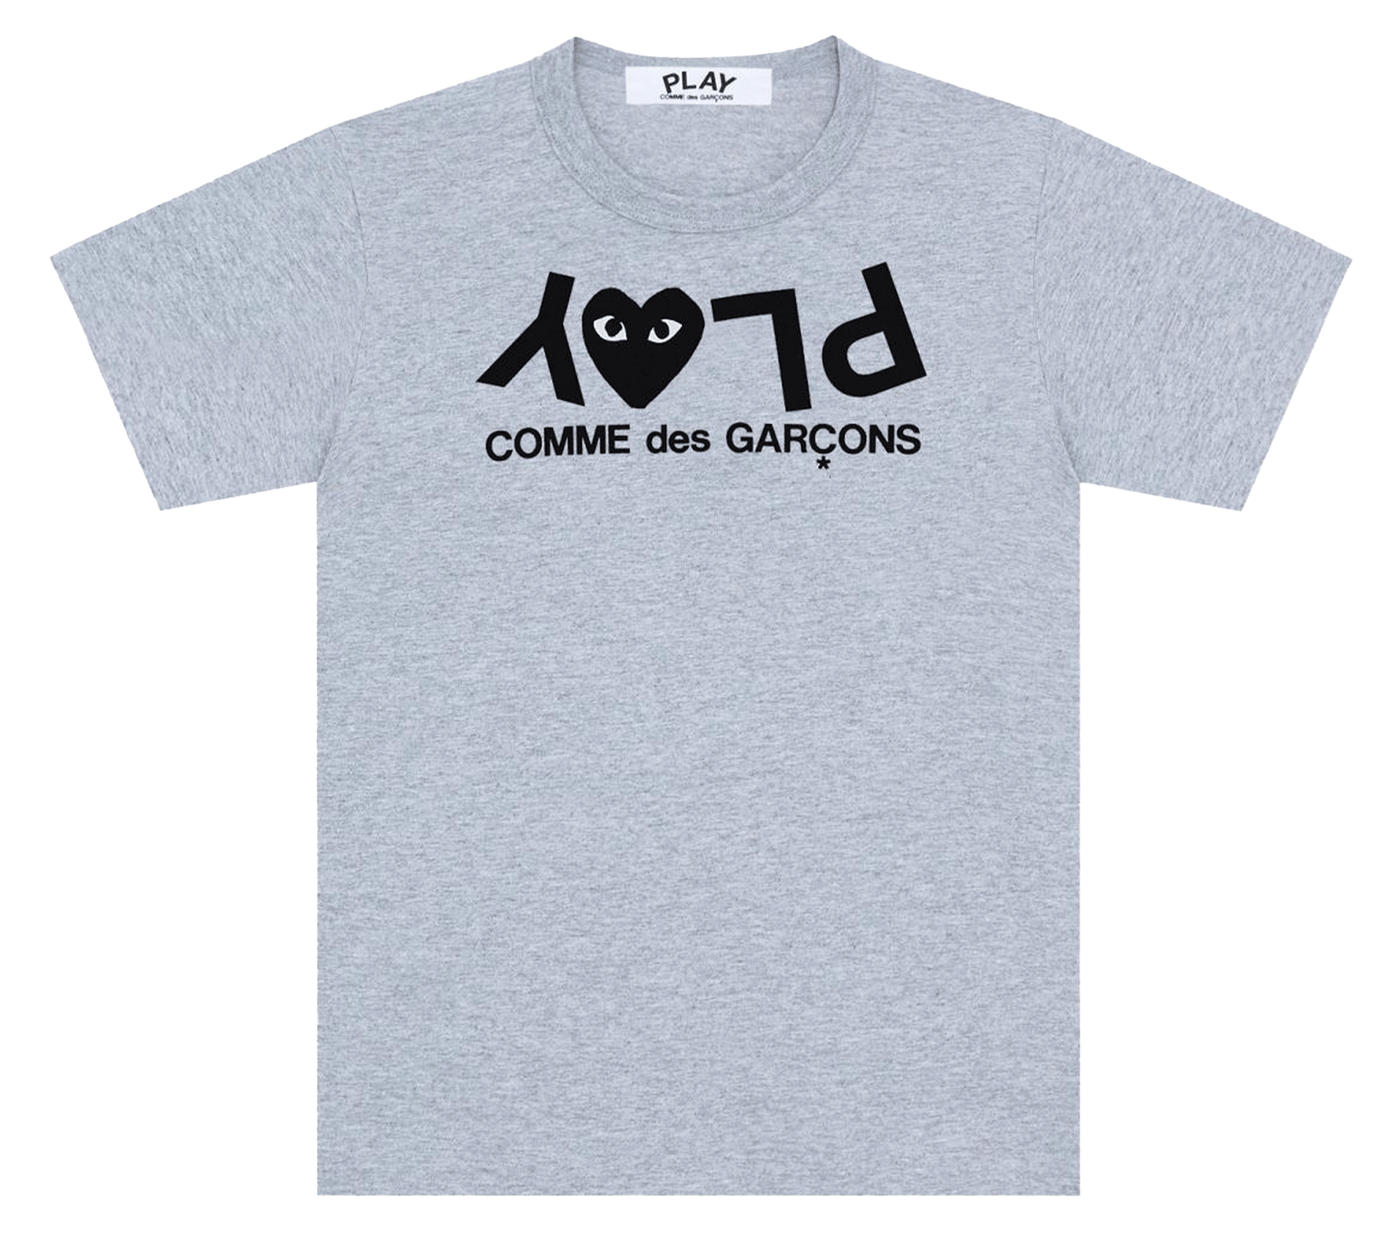    Comme-des-Garcons-Play-T-Shirt-with-Black-Invert-Logo-Print-Women-Grey-1